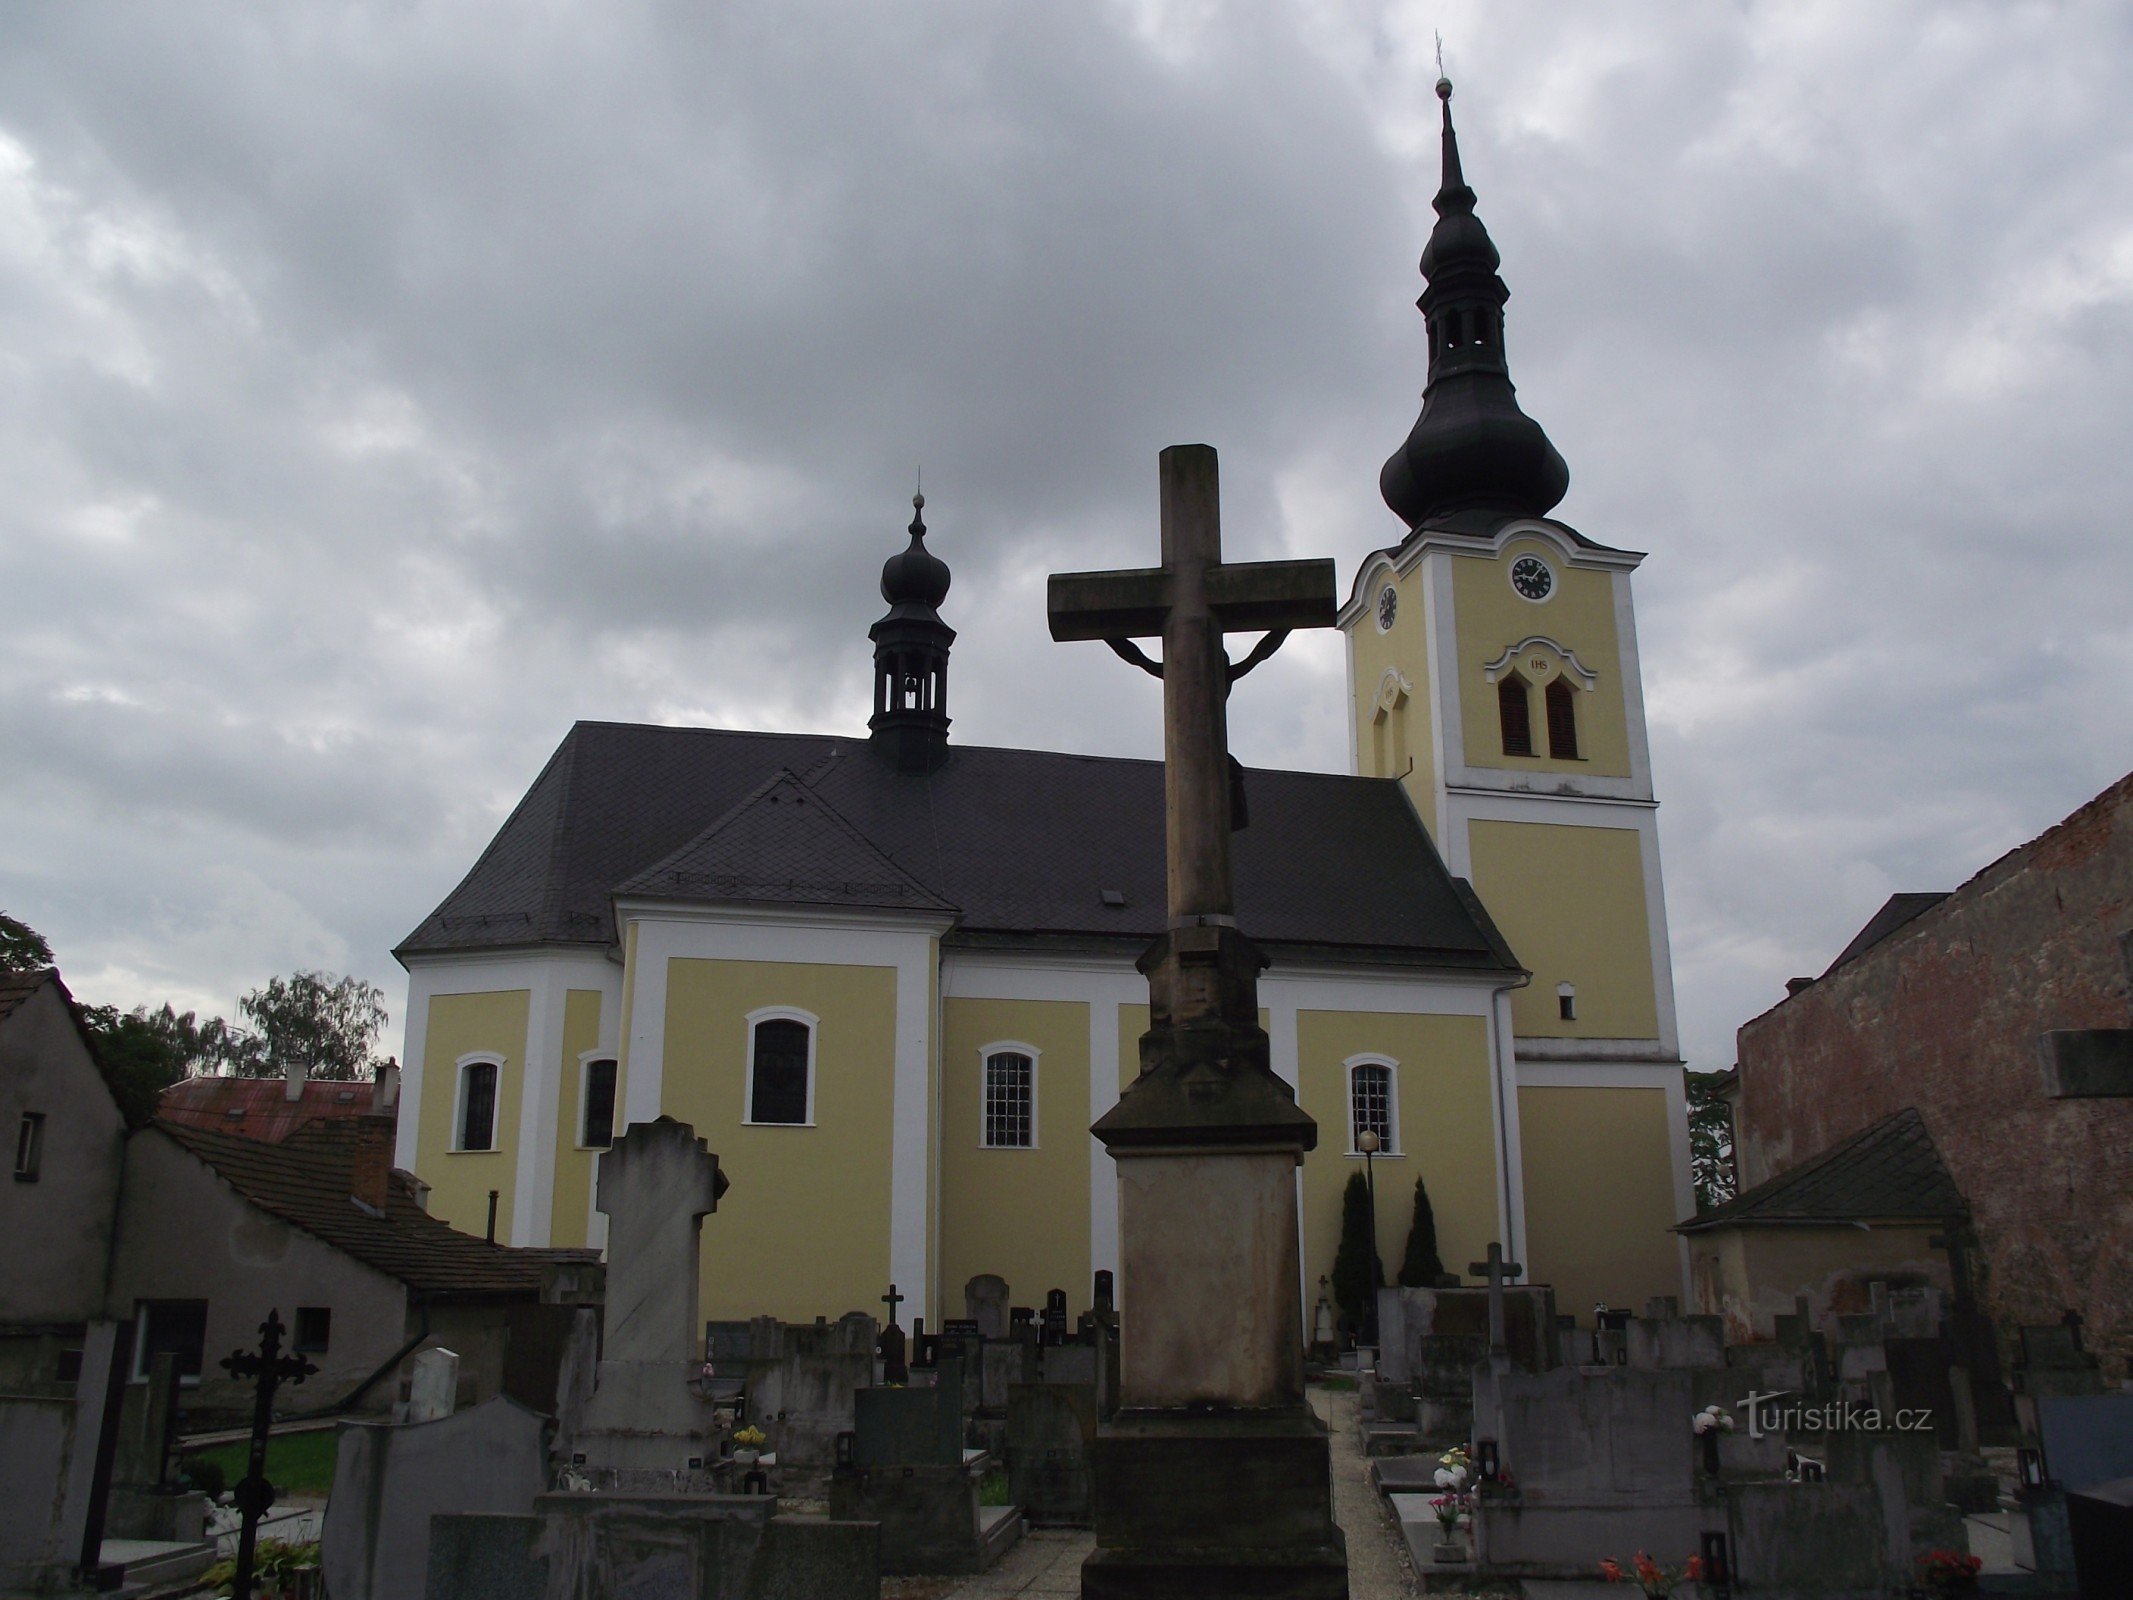 Moravičany – en by full av (inte bara små) monument